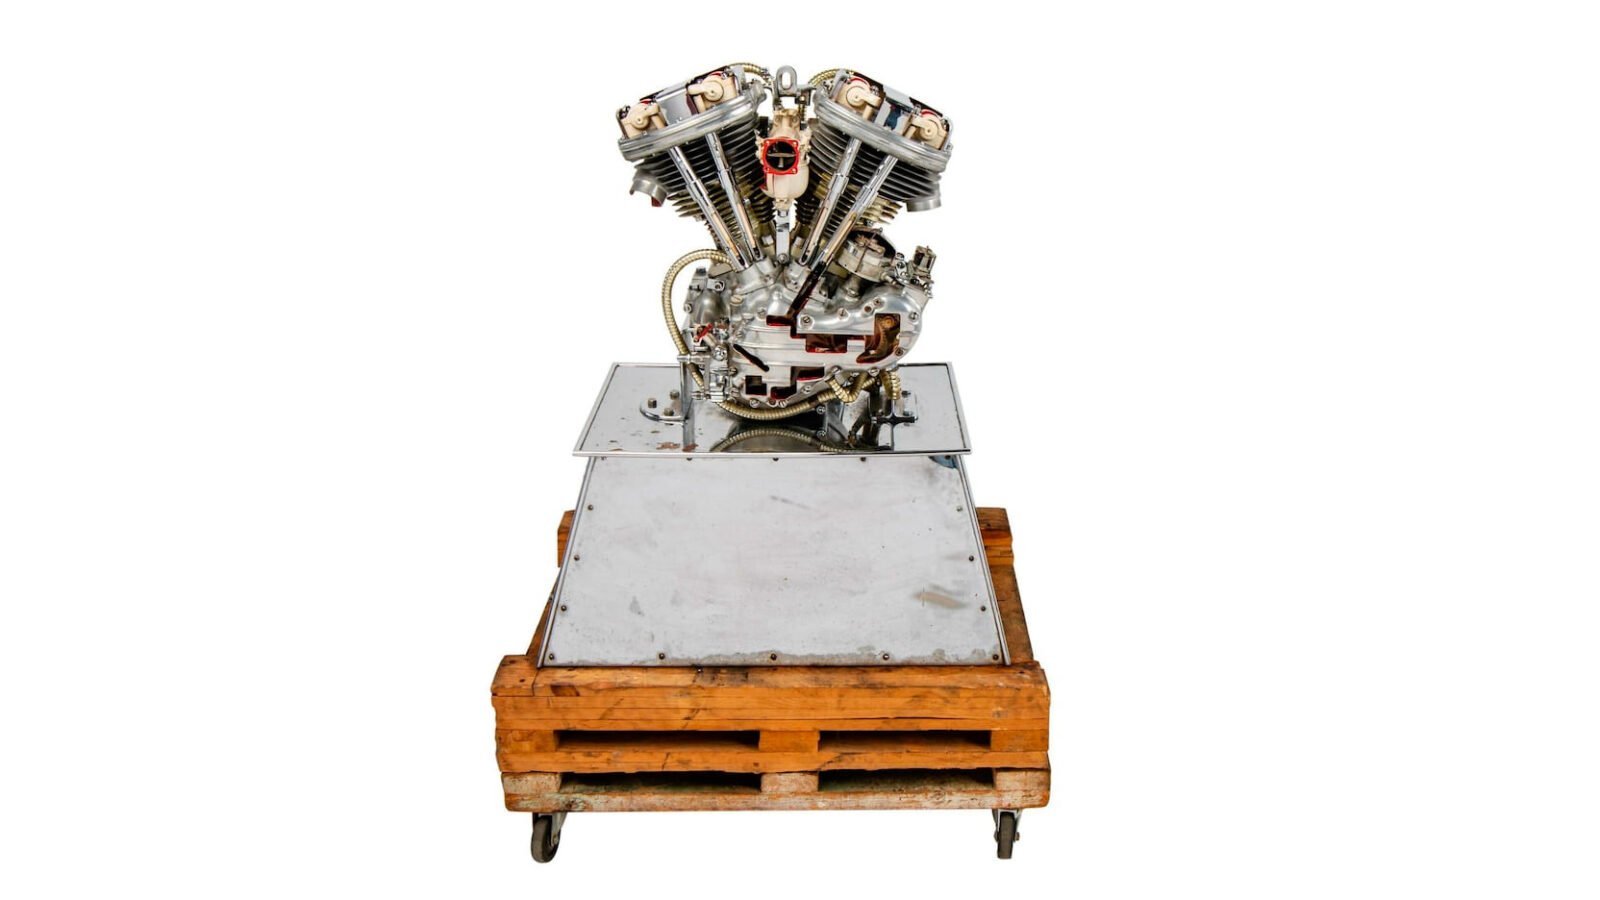 Harley-Davidson Panhead V-Twin Cutaway Training Engine